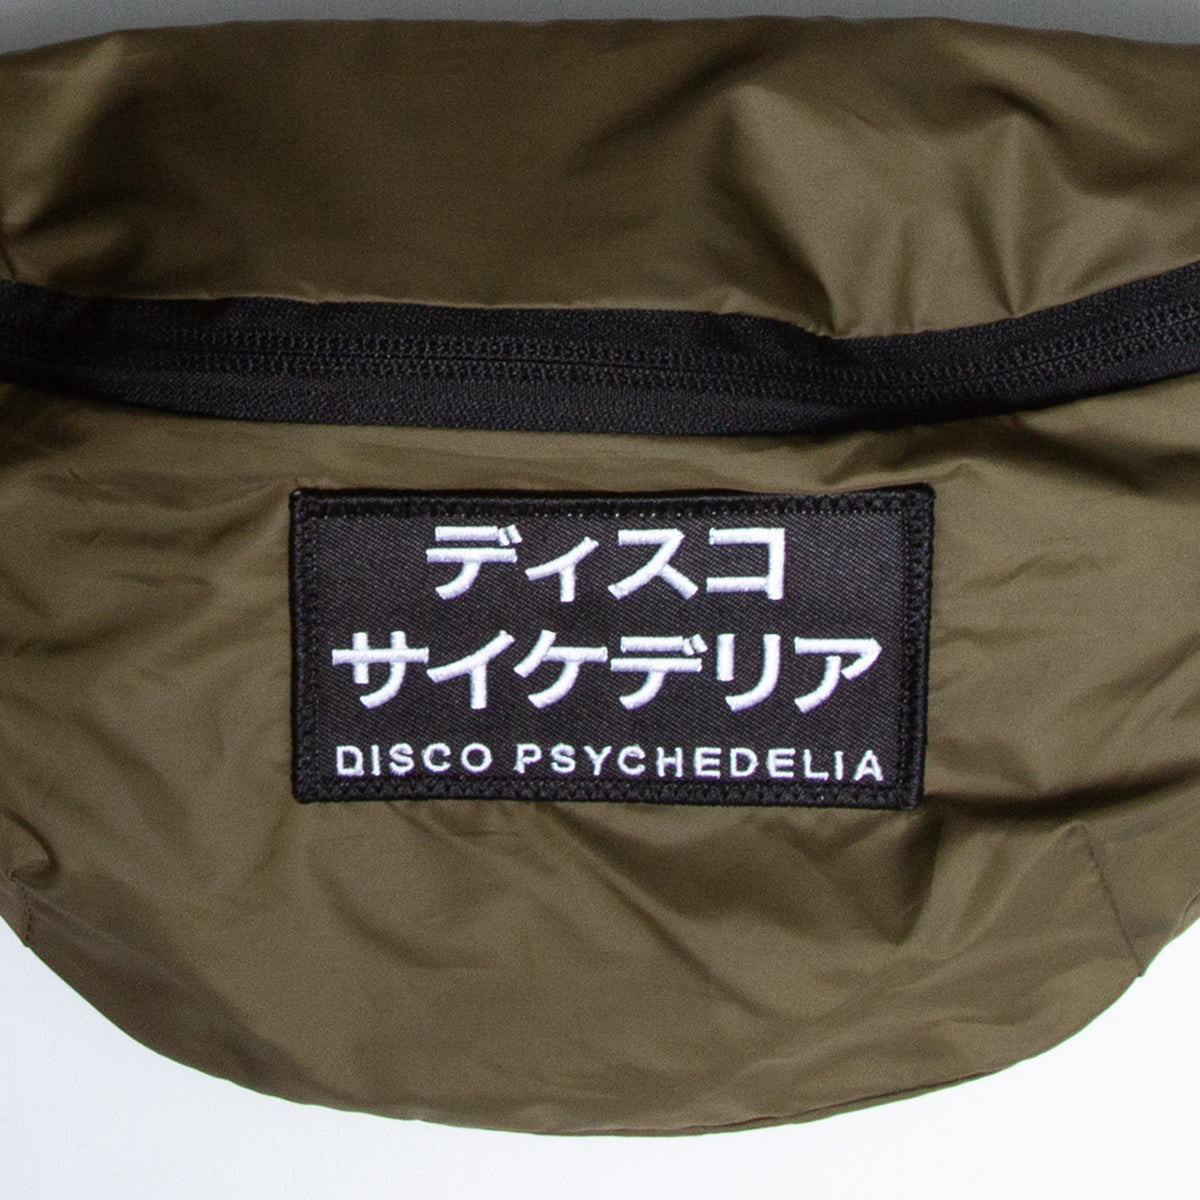 Disco Psychedelia - Bum Bag - Khaki